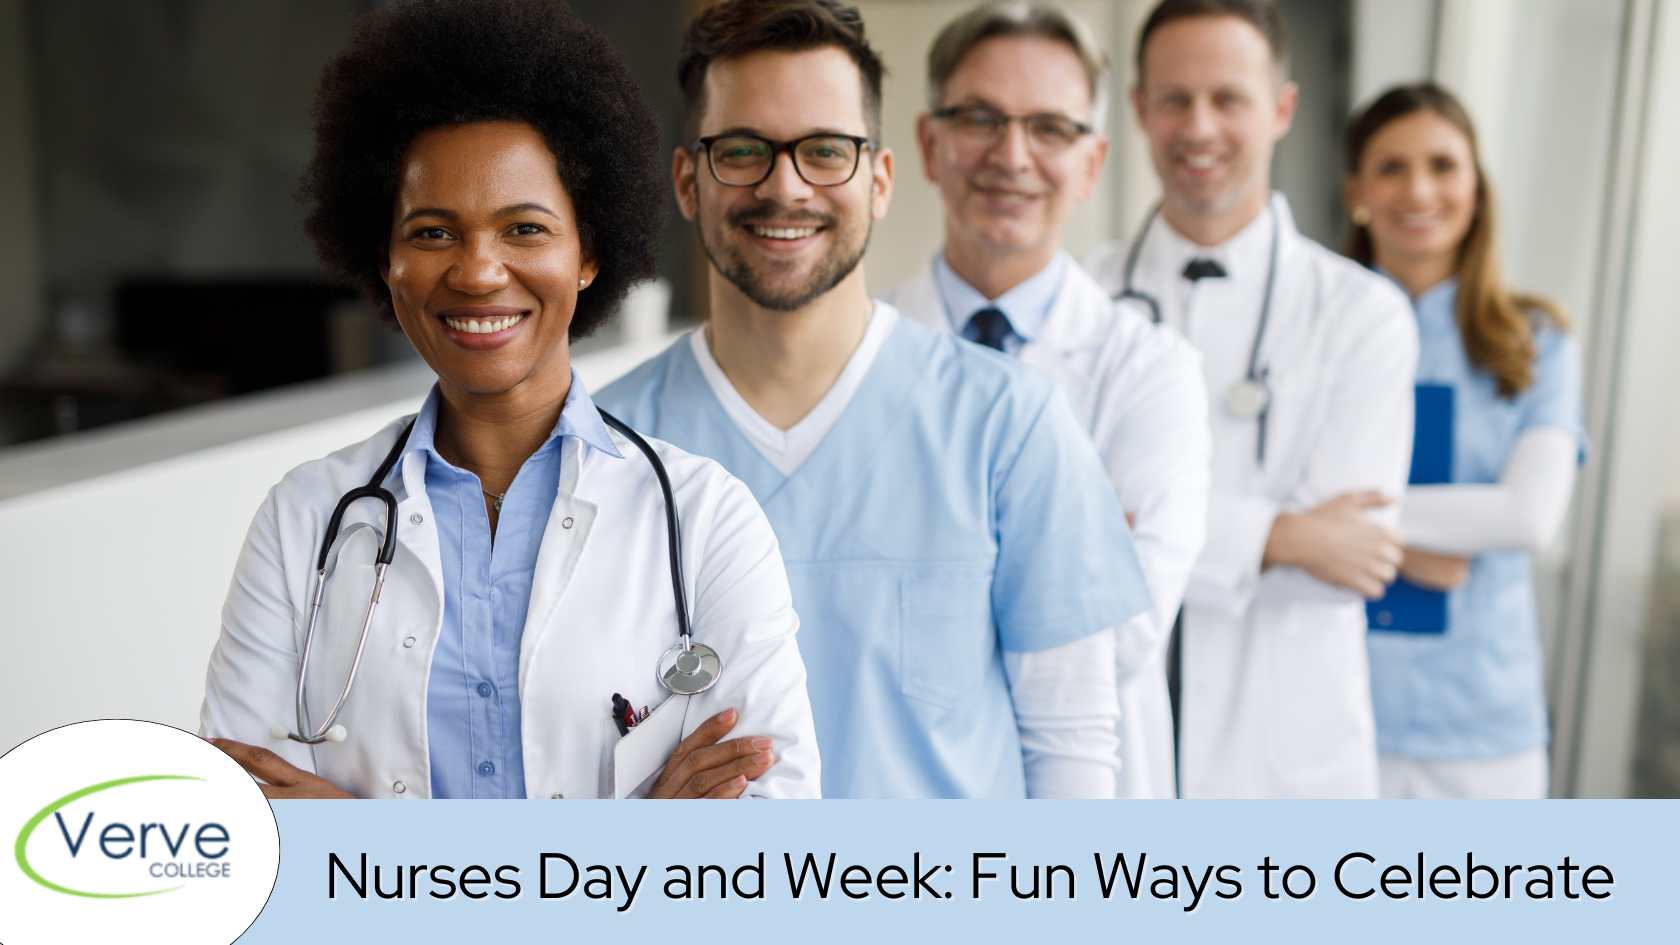 When is Nurses Day? When is Nurses Week? Discover Fun Ways to Celebrate